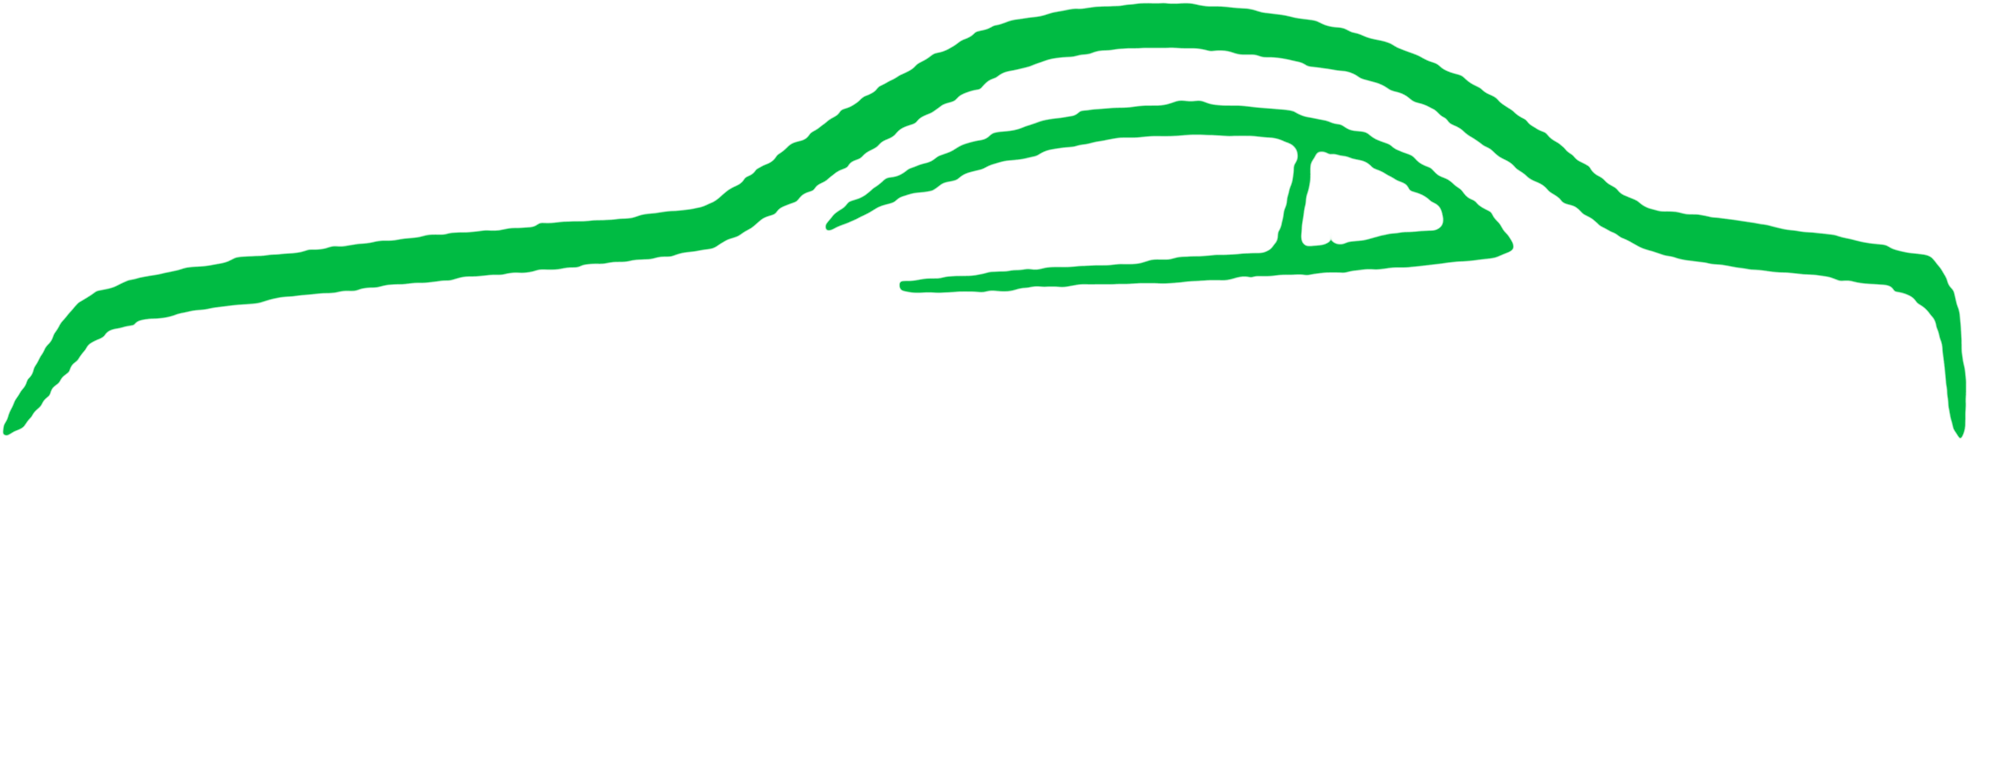 Delalic & Kiefer Automobil GmbH